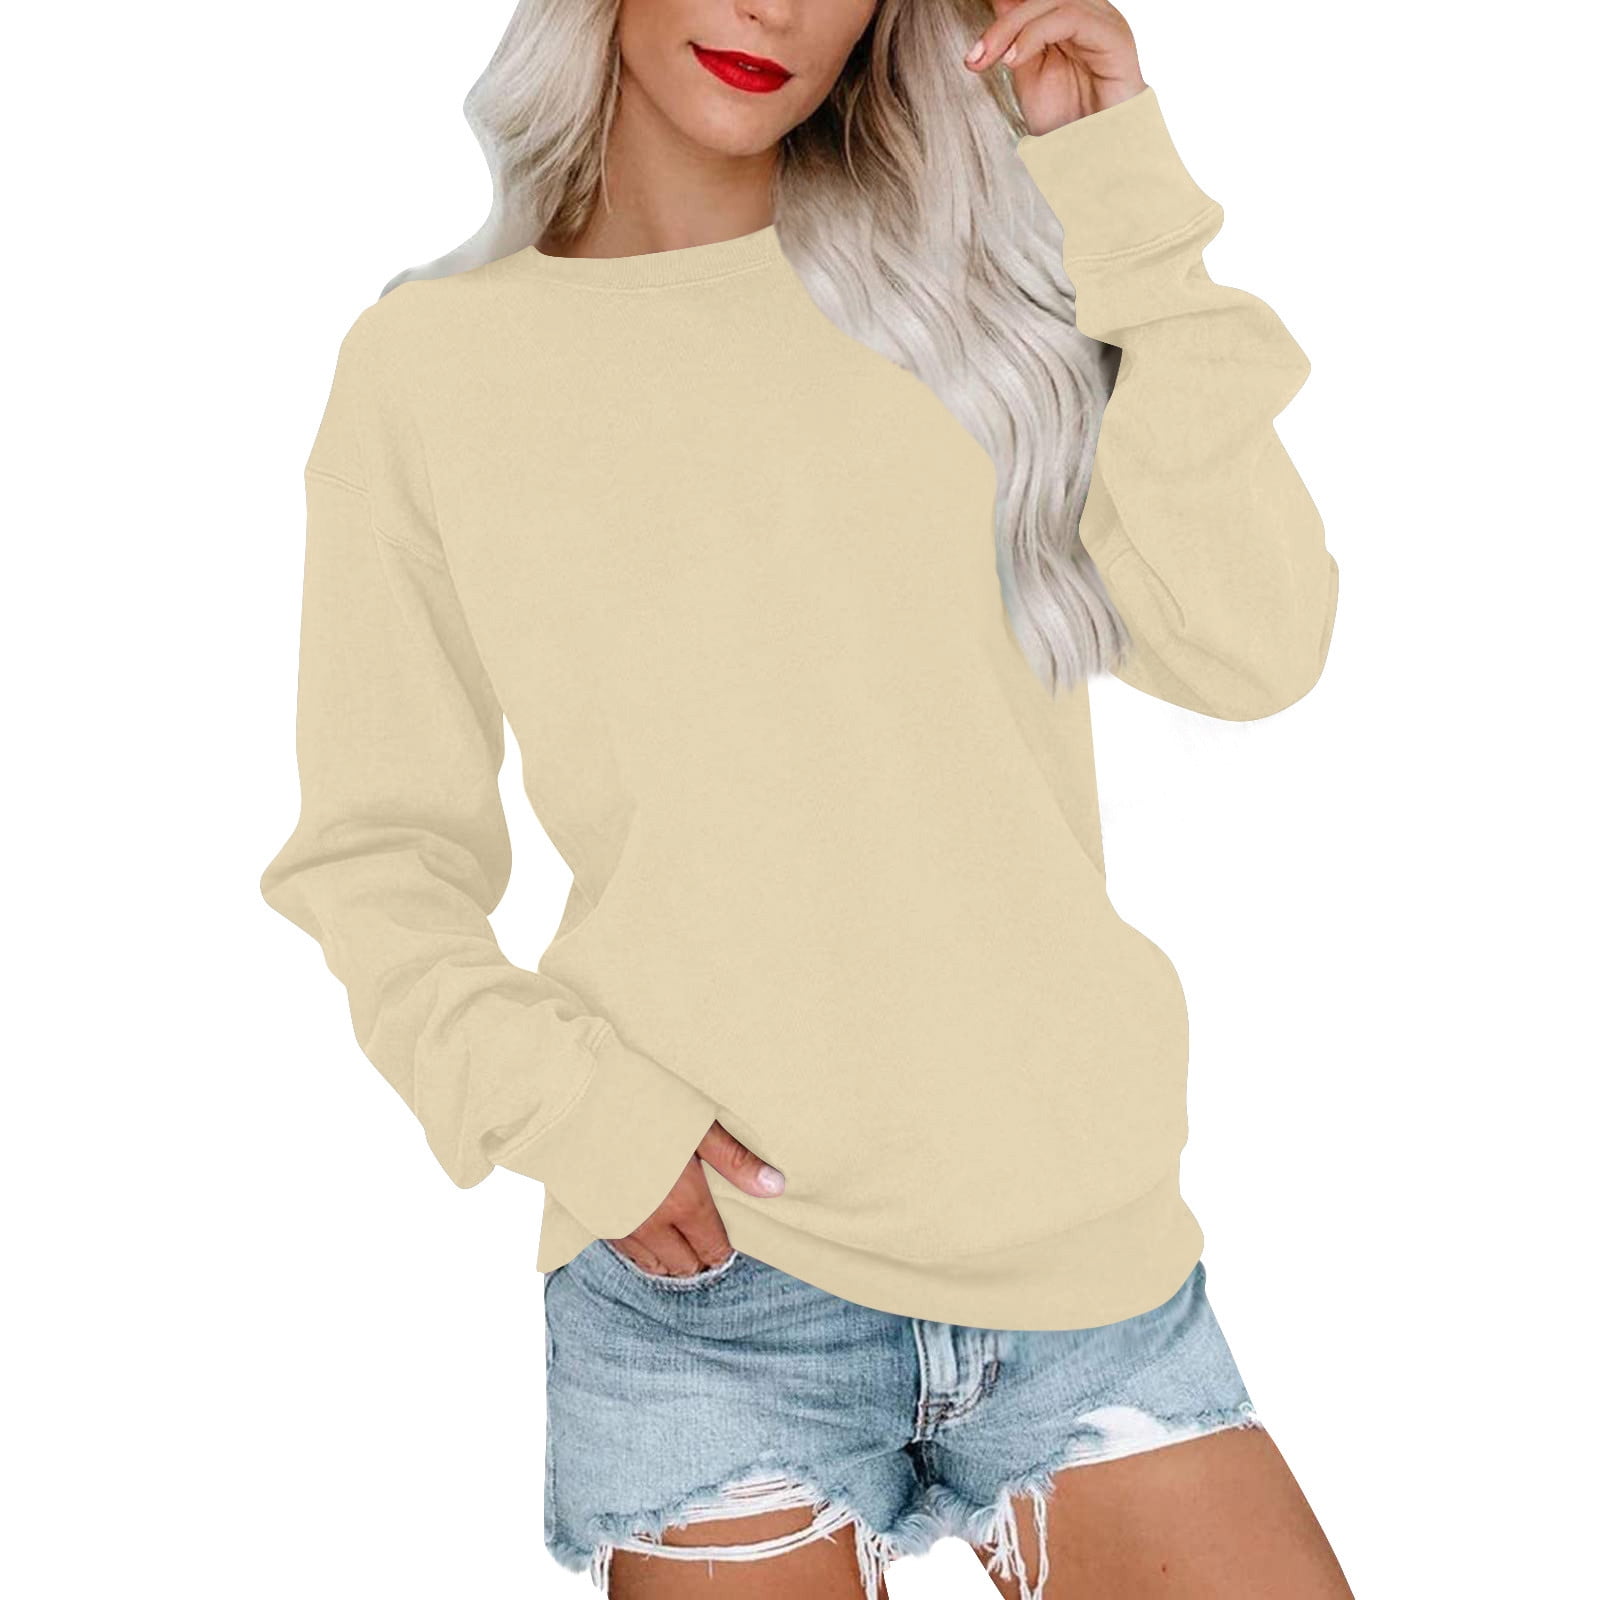 Sksloeg Womens Casual Sweatshirt Casual Crewneck Sweatshirt Long Sleeve  Yellow Shirt Soft Lightweight Loose Top,Yellow 2XL 